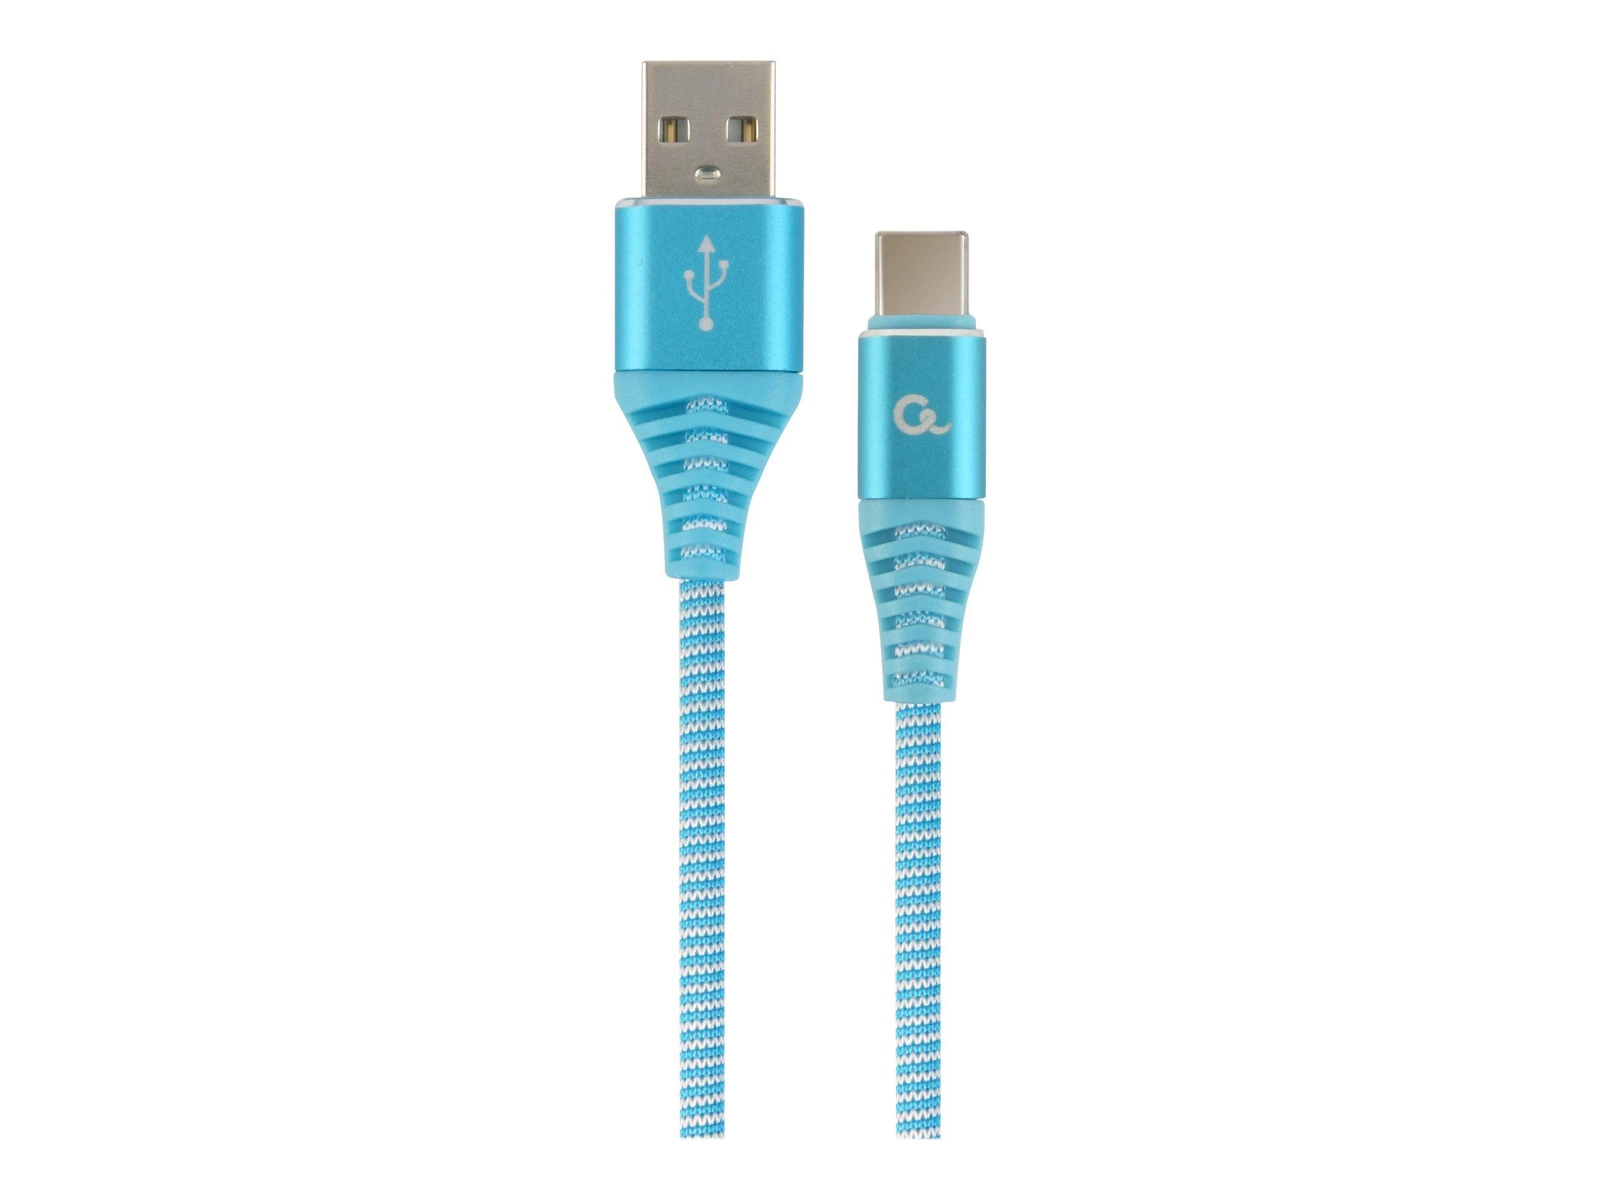 GEMBIRD CC-USB2B-AMCM-2M-VW Gembird premium kabel USB-C 2.0 (AM/CM) metalowe wtyki, oplot, 2m, turkus/biały